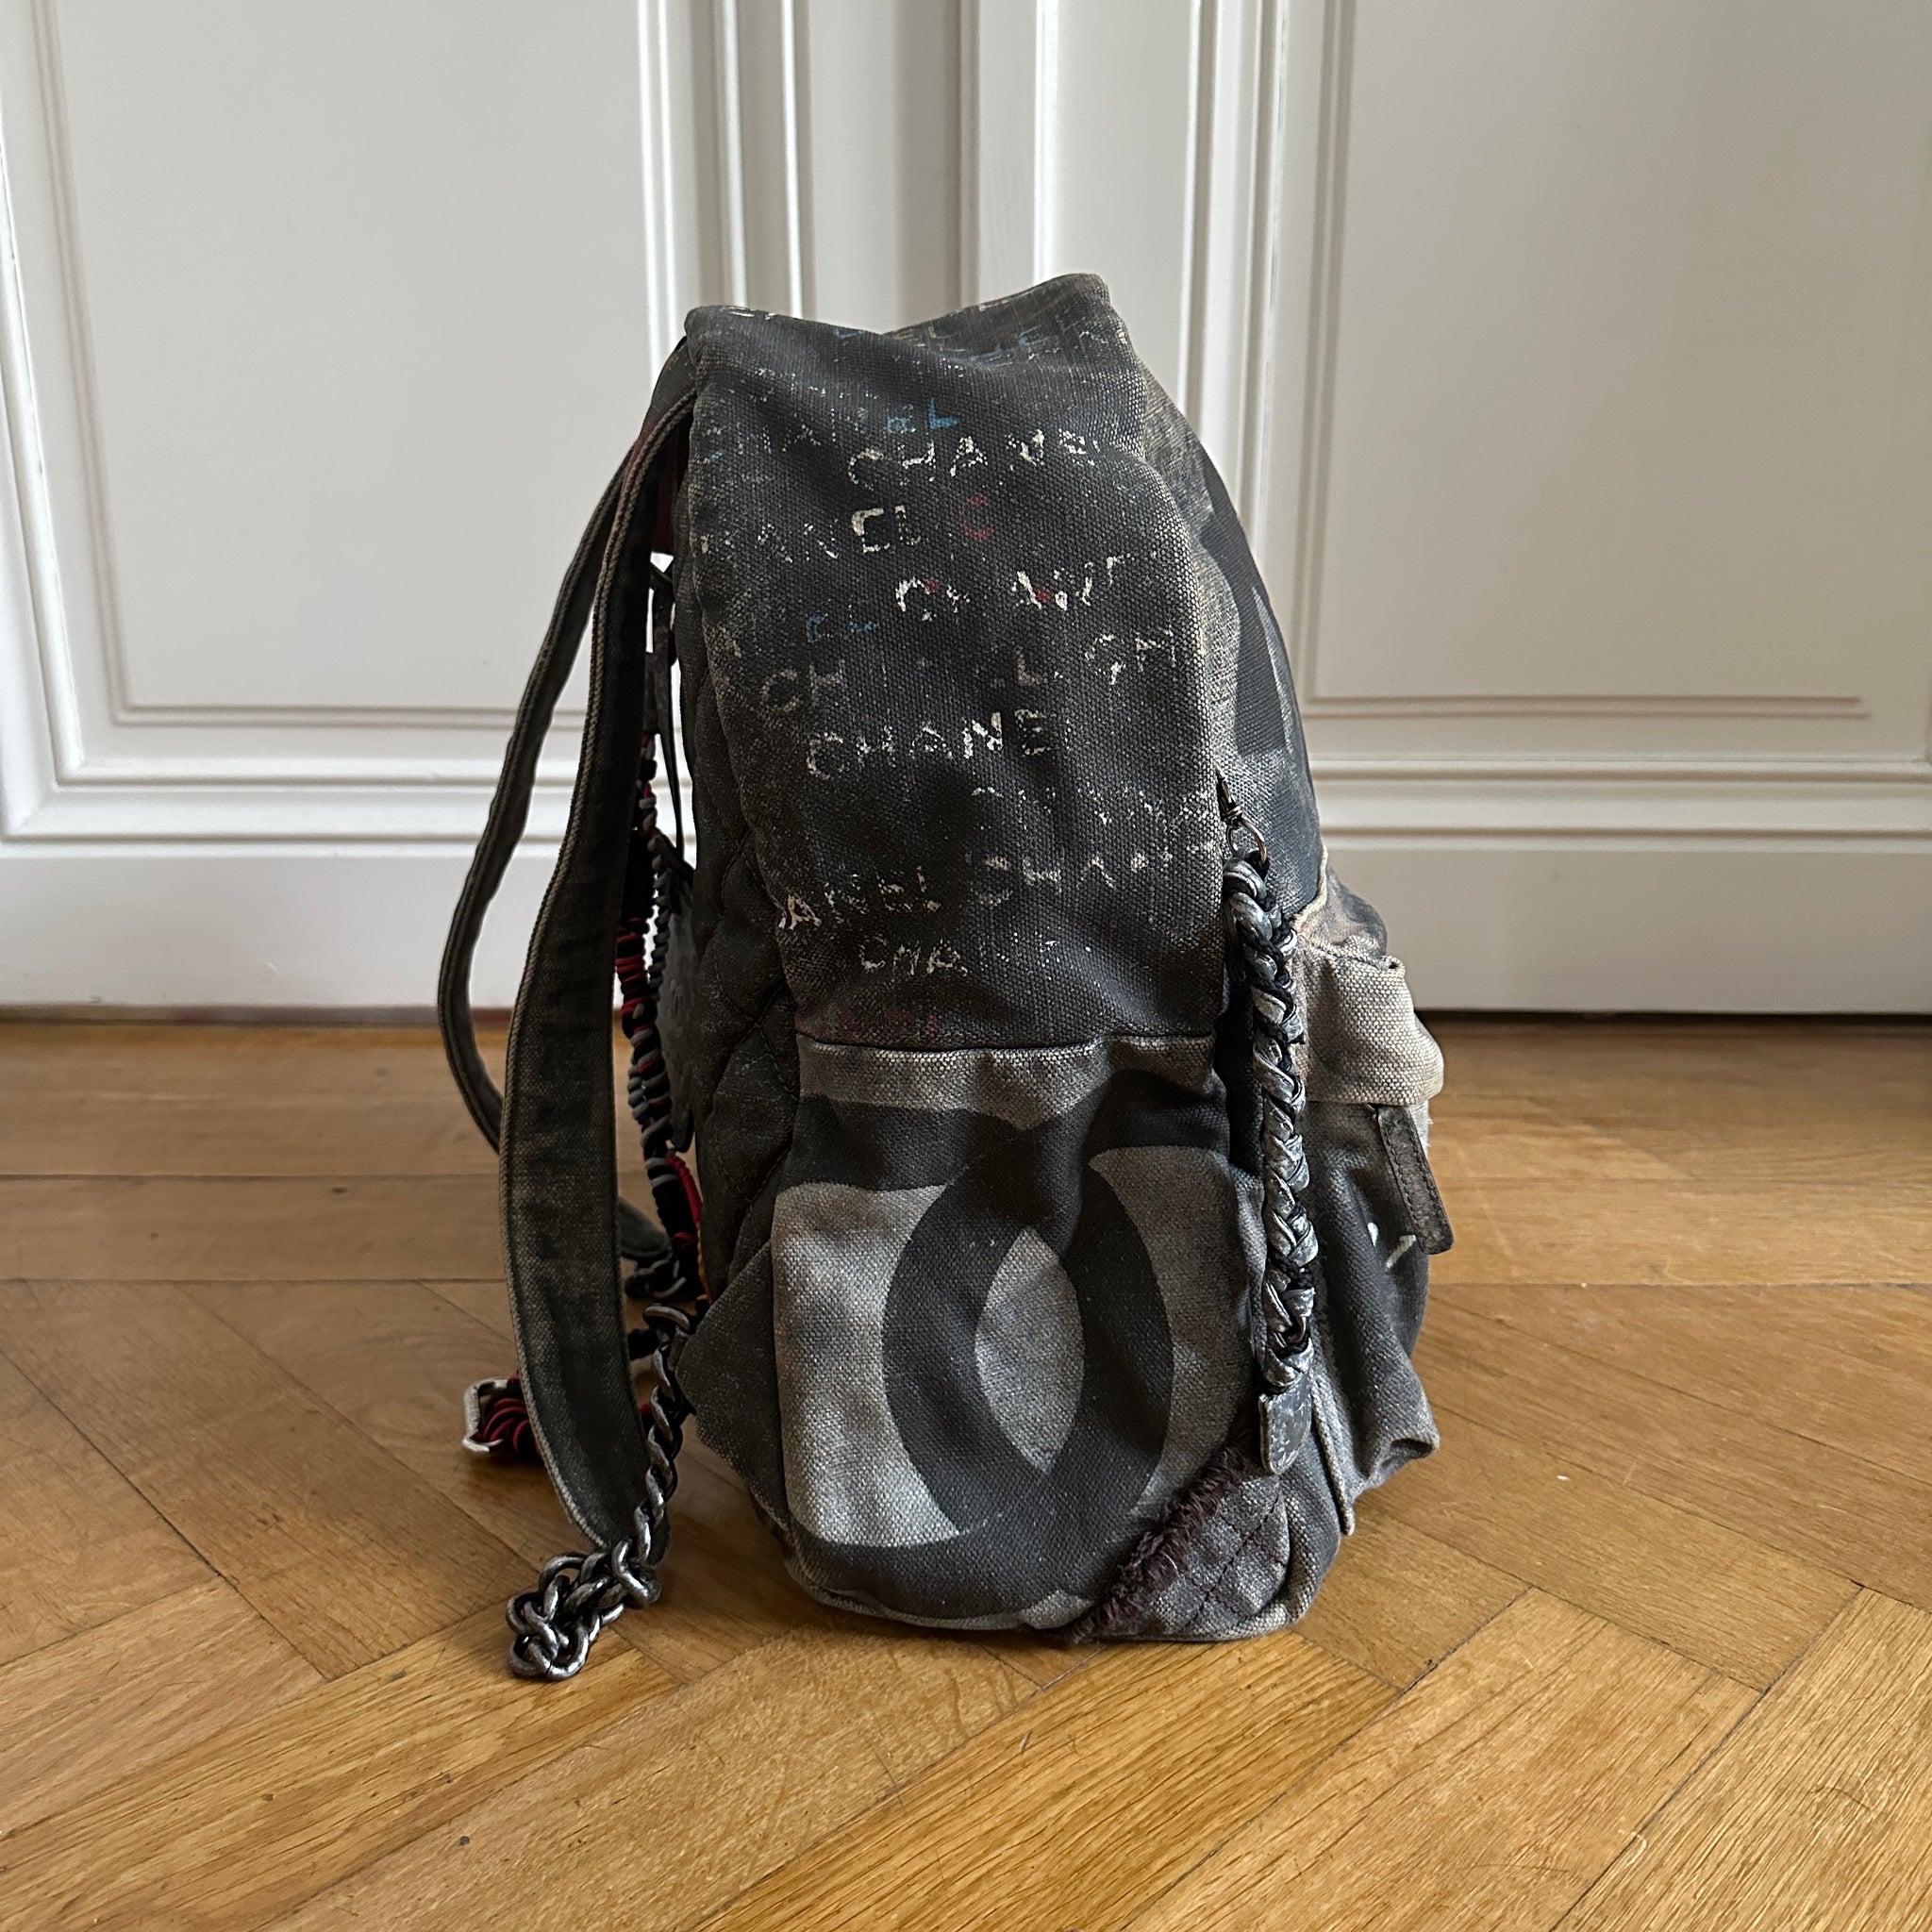 Chanel Graffiti Bag 